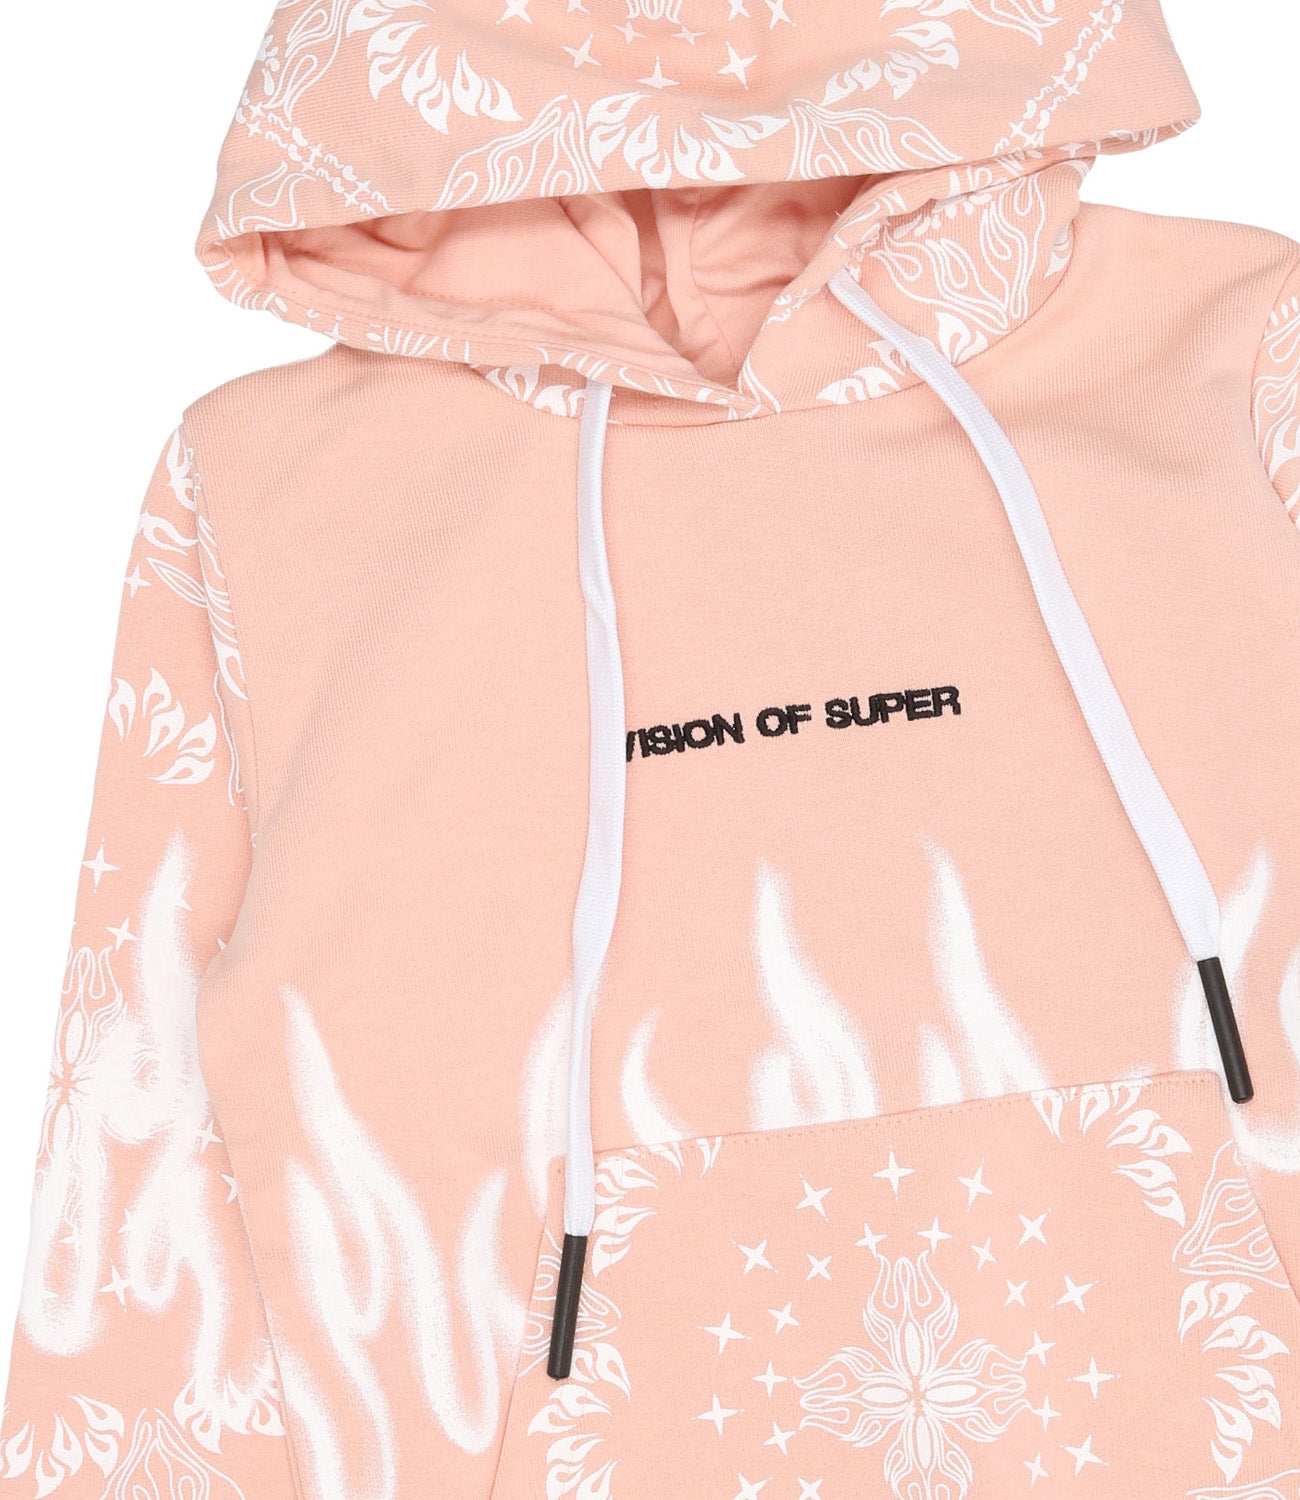 Vision of Super Kids | Sweatshirt Bandana Print Pink and White